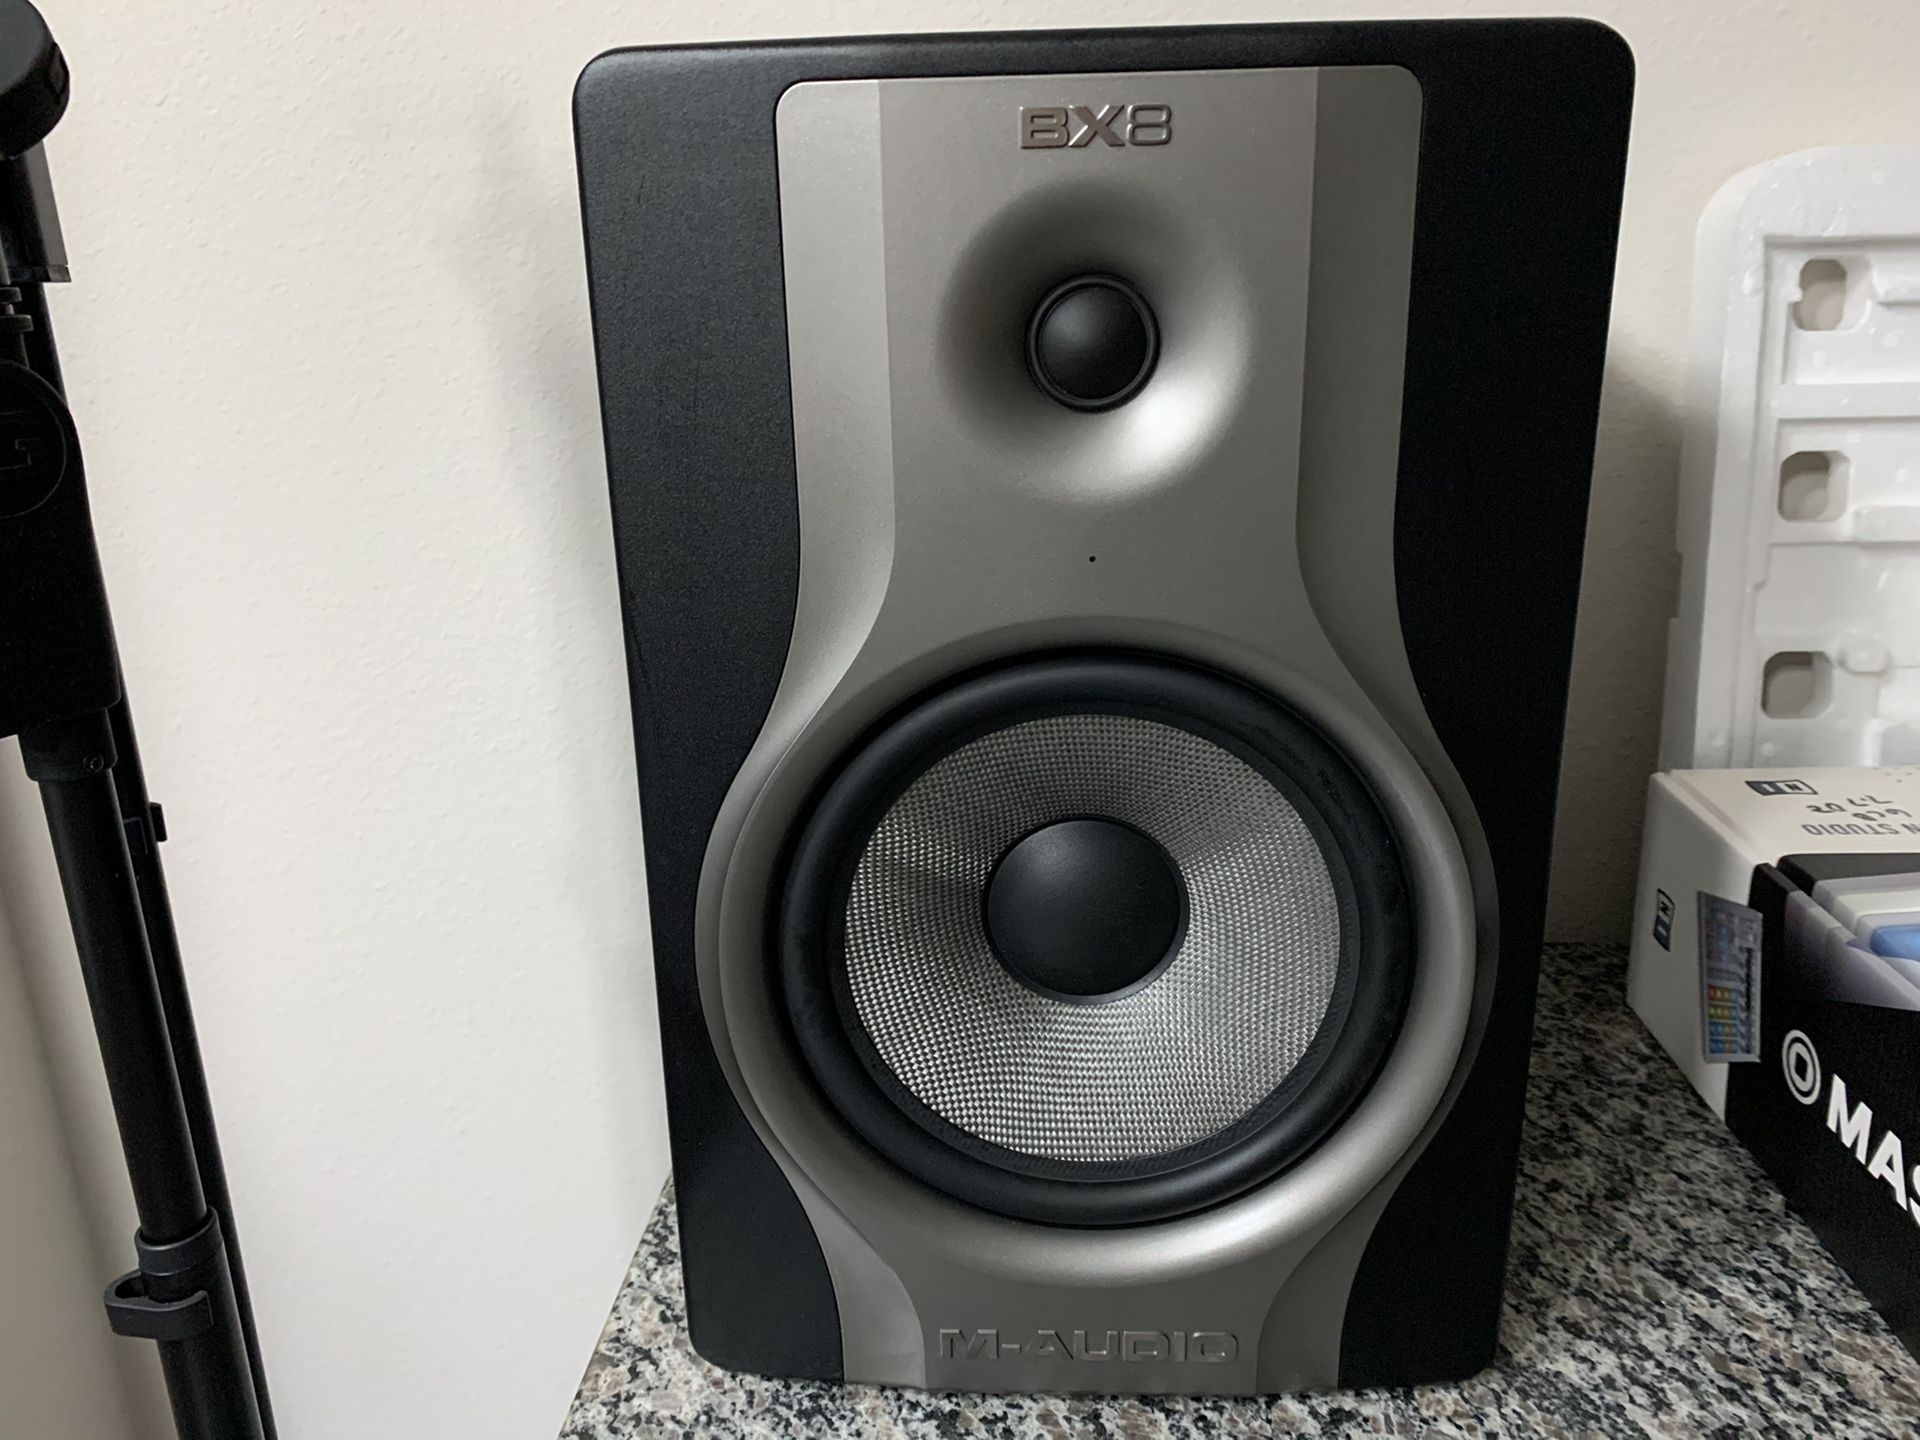 Bx8 m-audio 8” monitor speaker pair